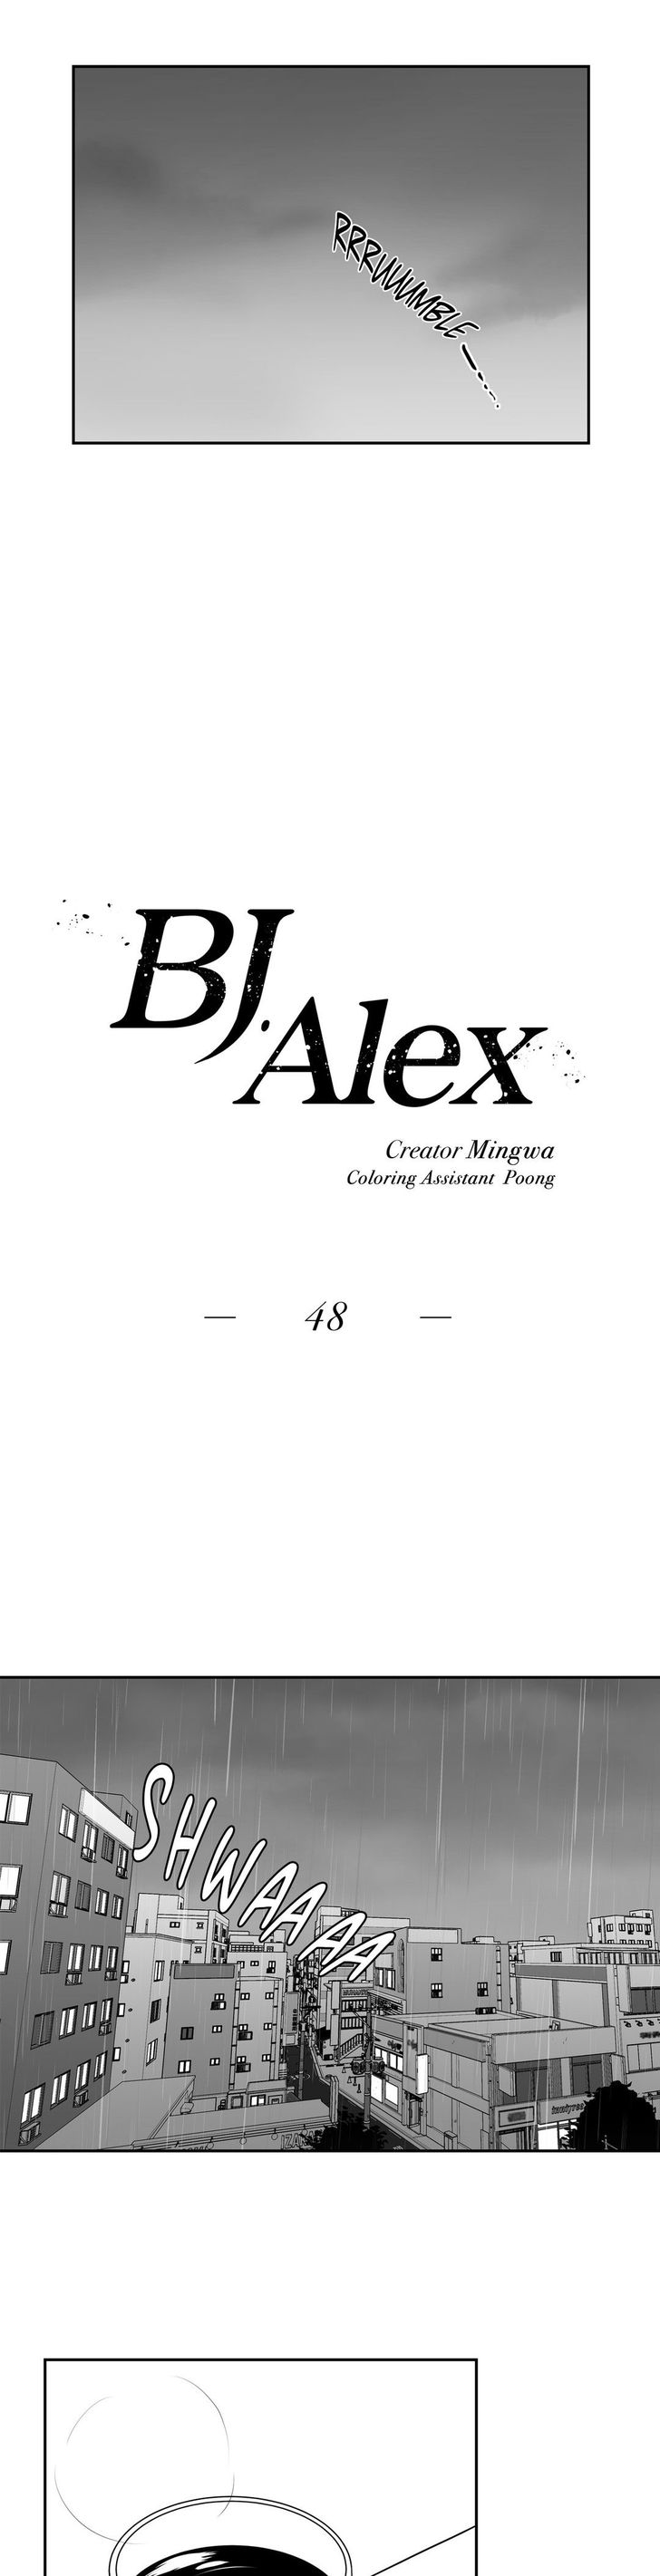 Bj Alex, Chapter 48 - Ch.048 image 03